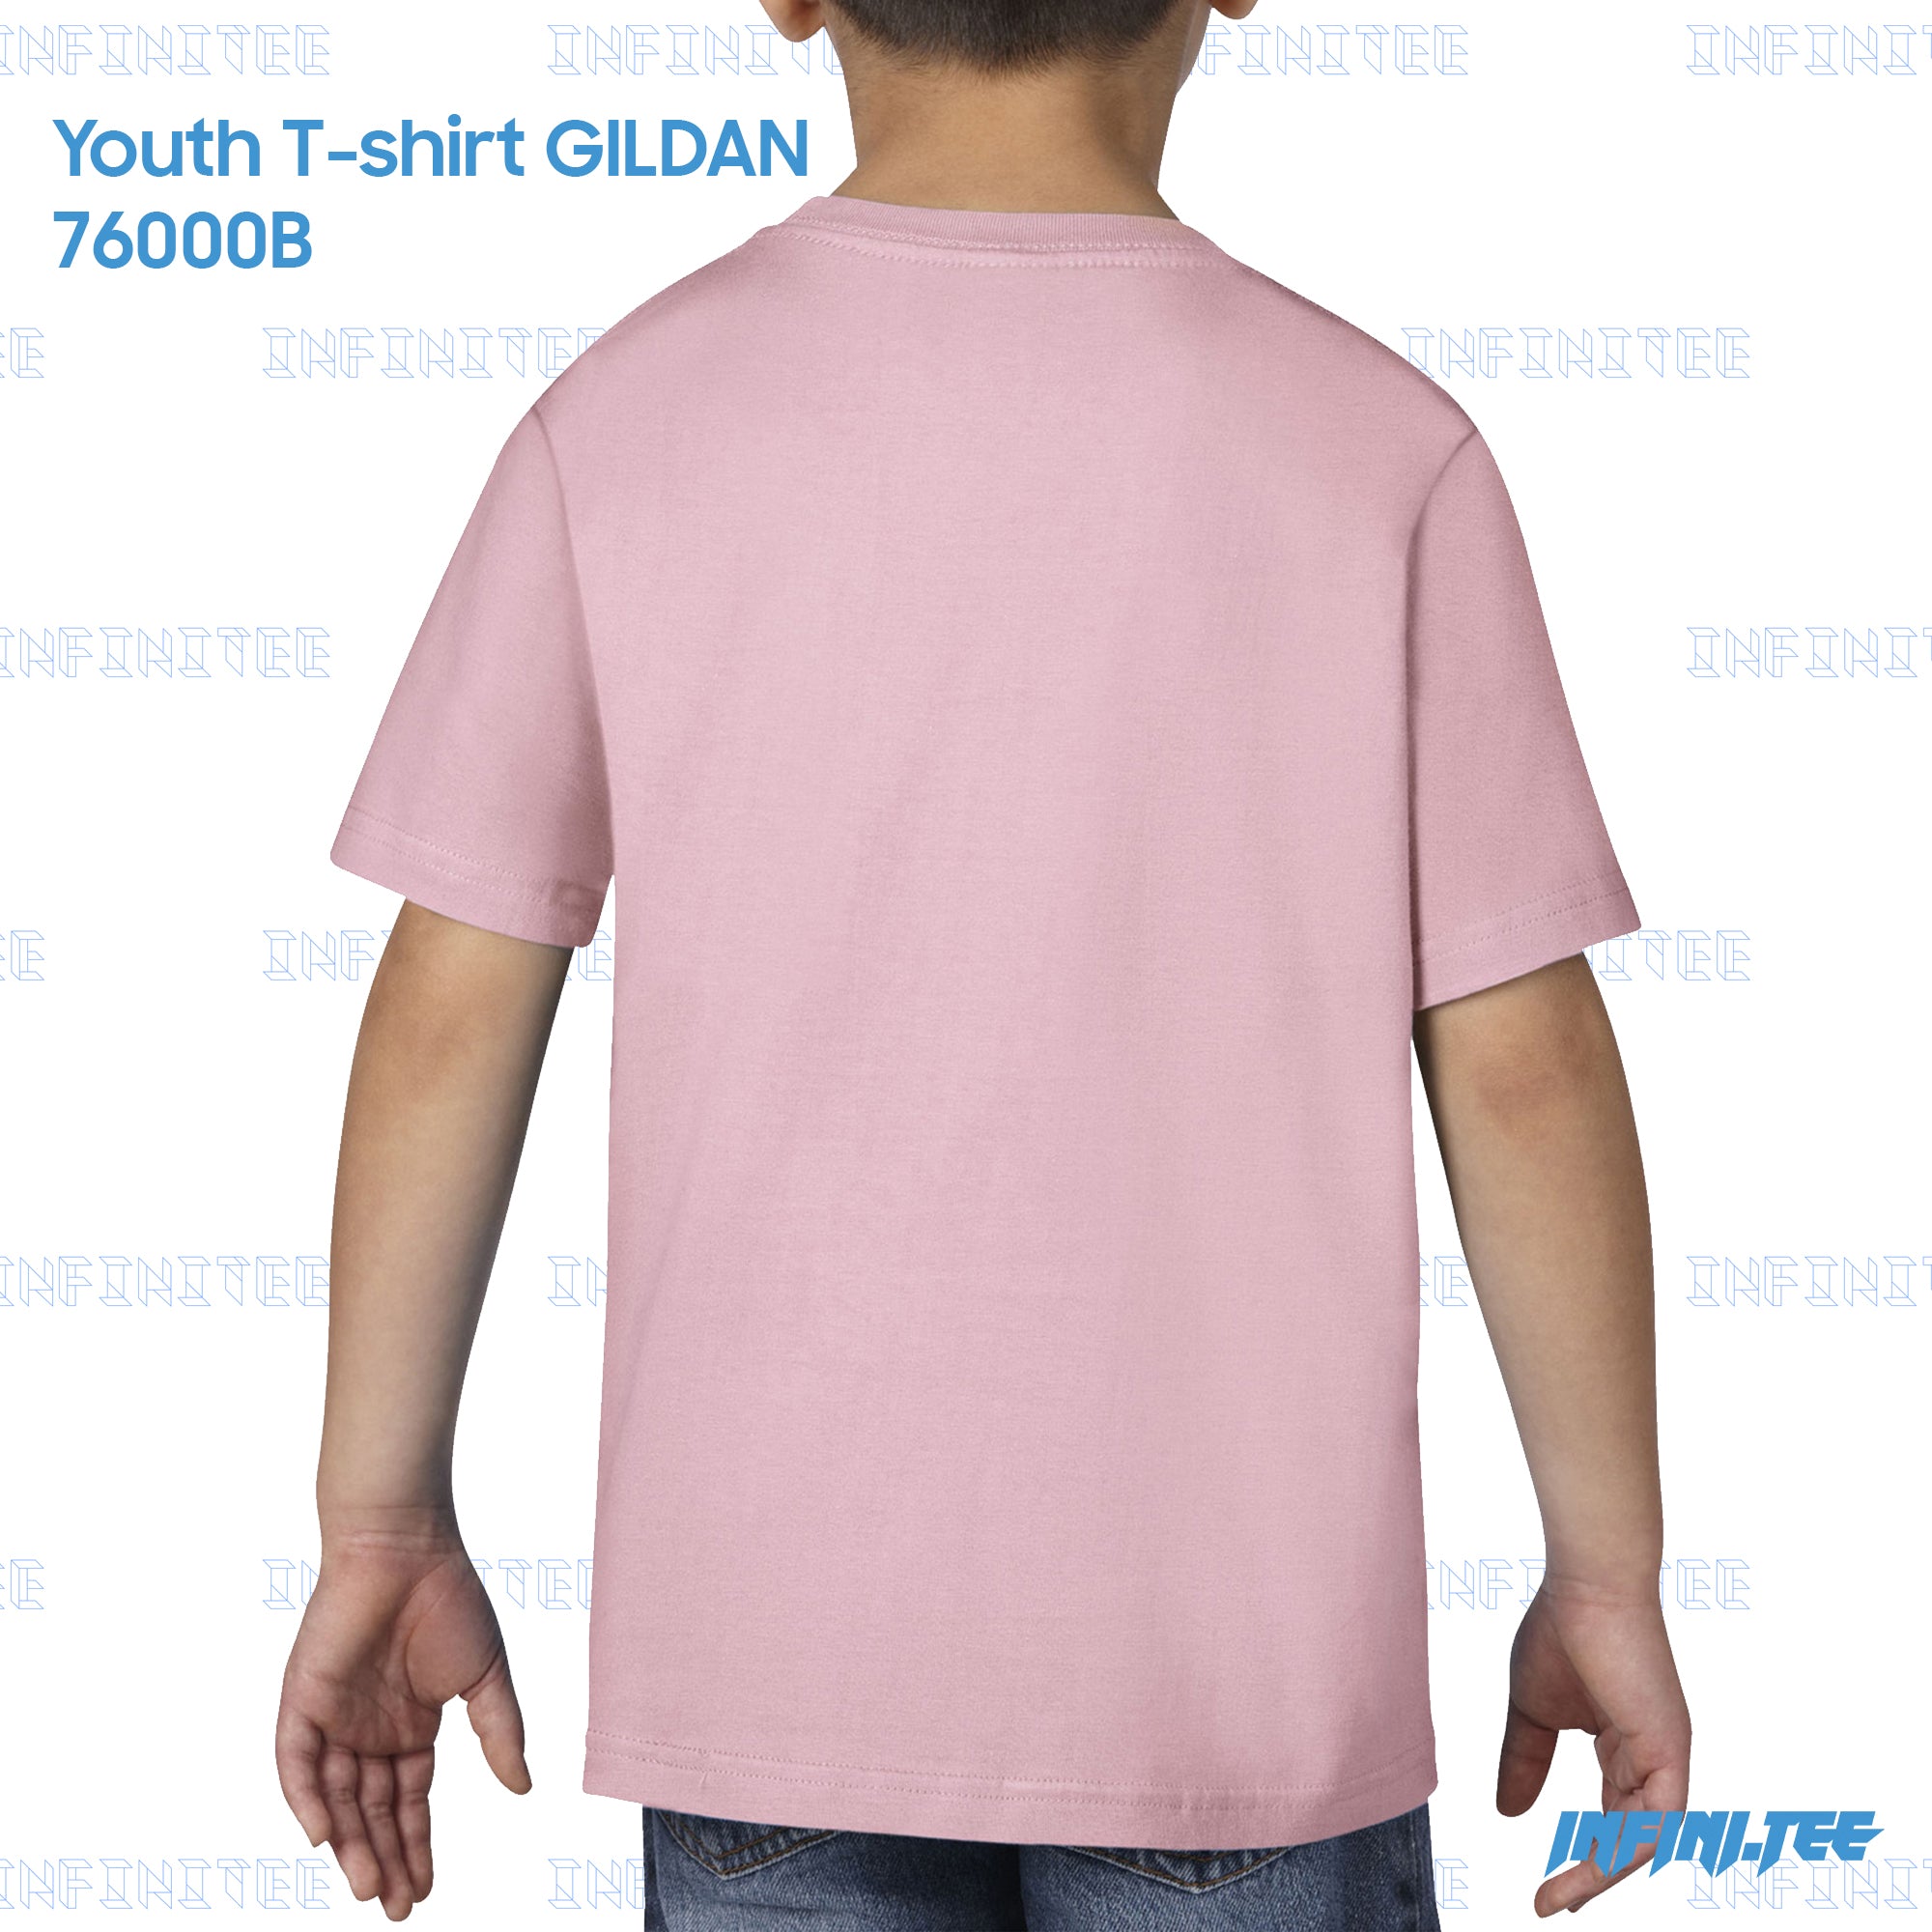 Youth T-shirt 76000B GILDAN - LIGHT PINK